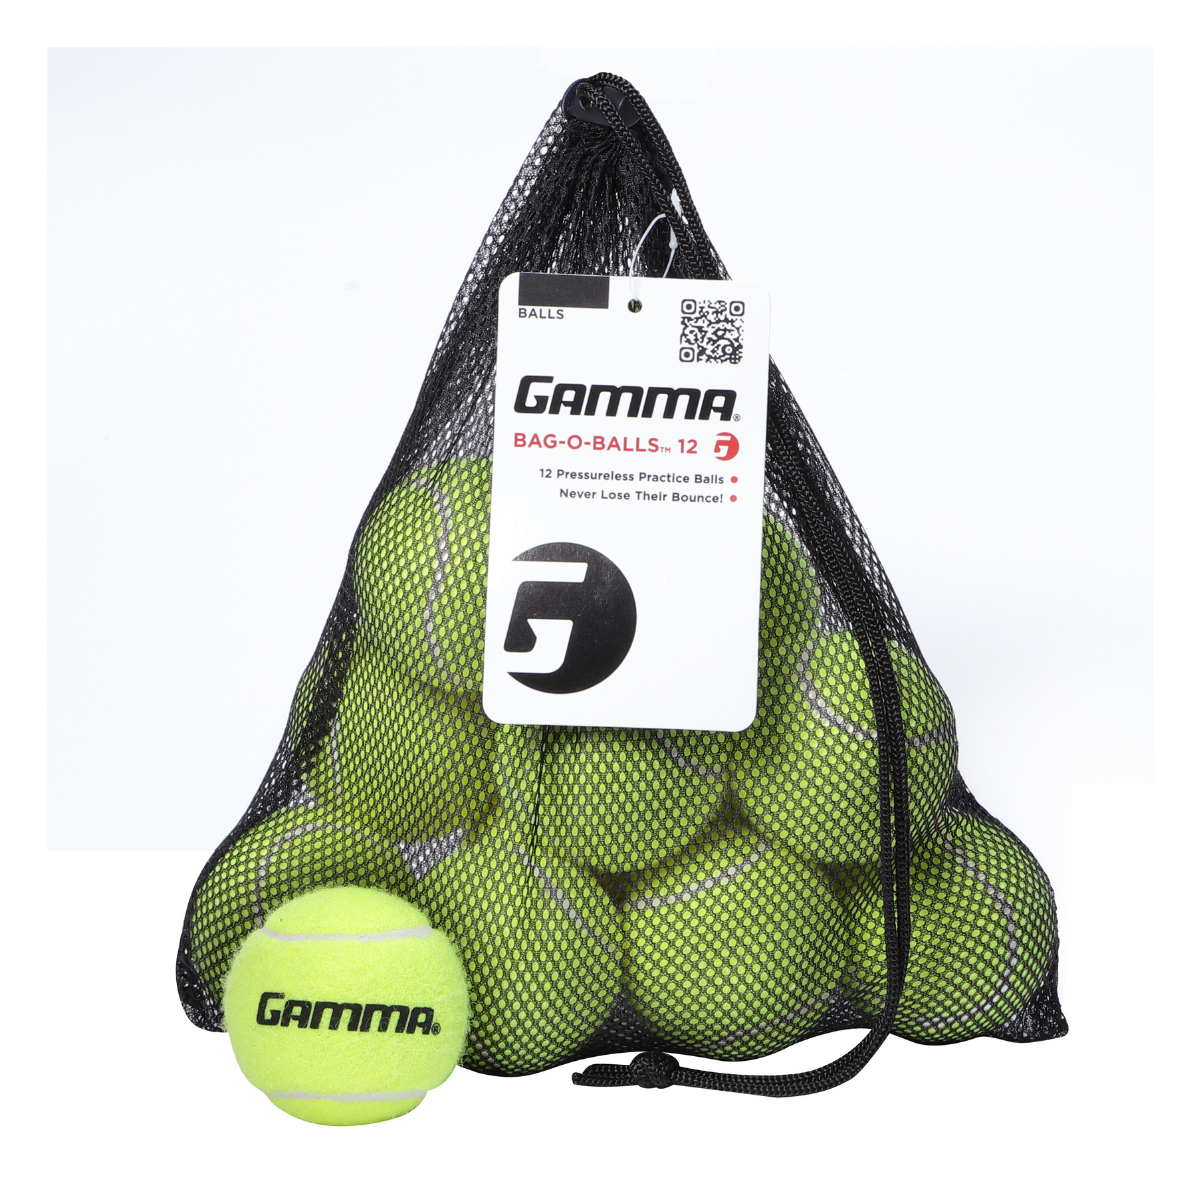 Gamma Pressureless Tennis Balls